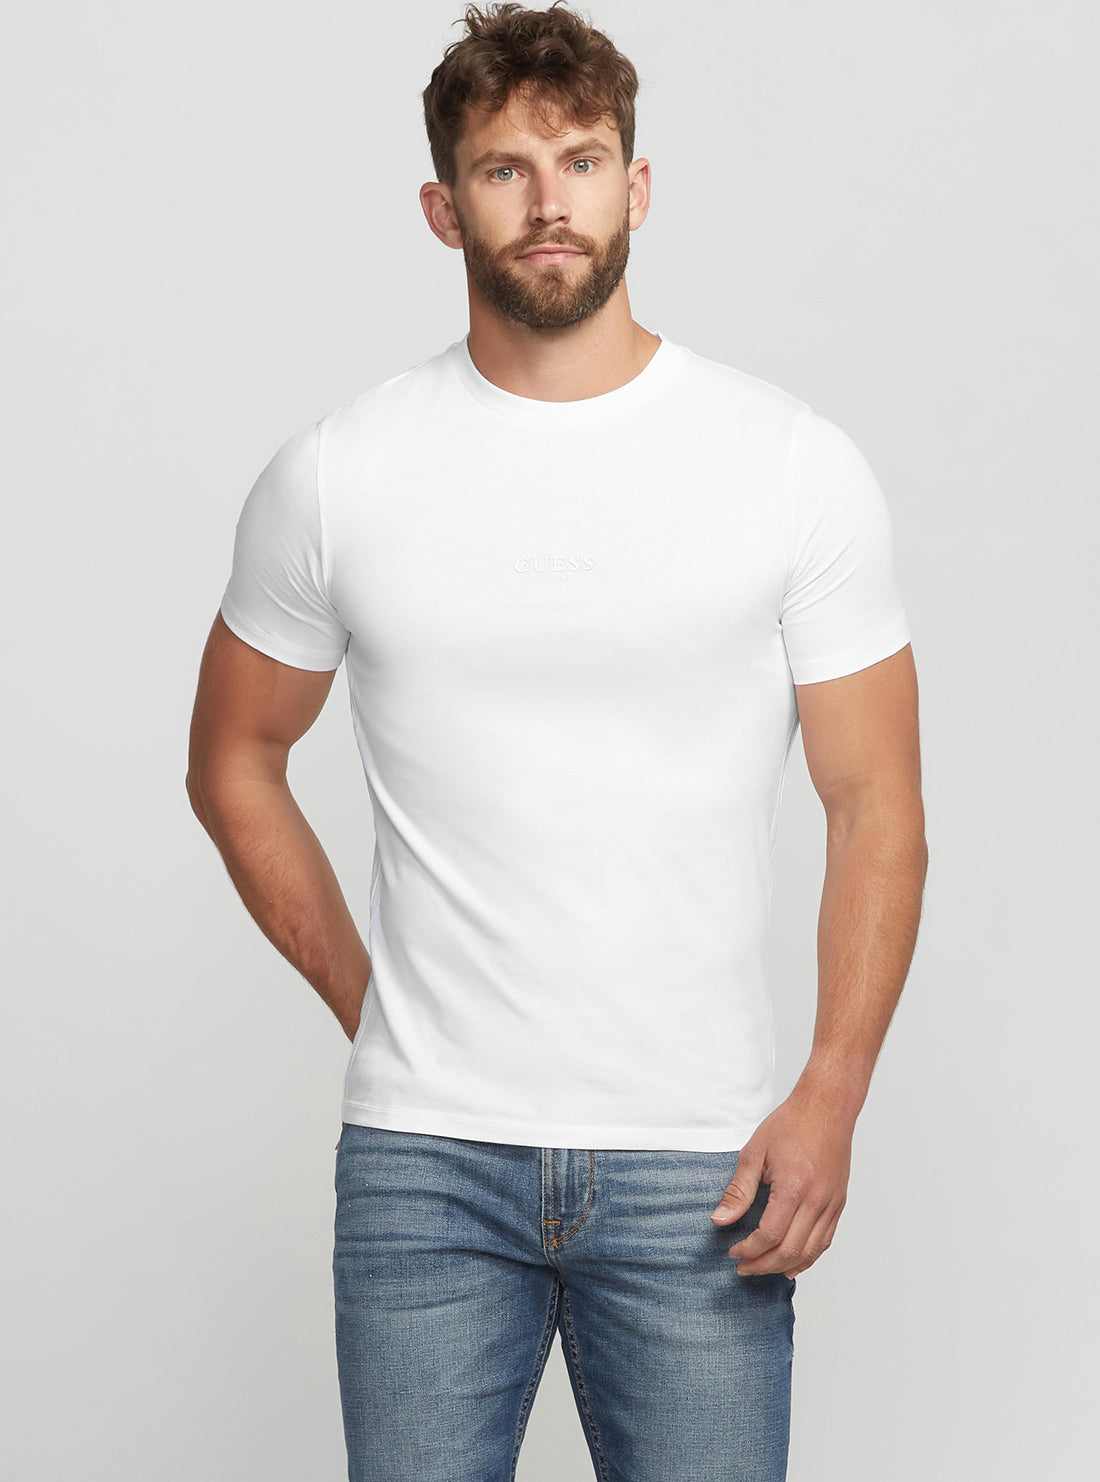 GUESS Men's Eco White Aidy T-Shirt M2YI72I3Z11 Front View